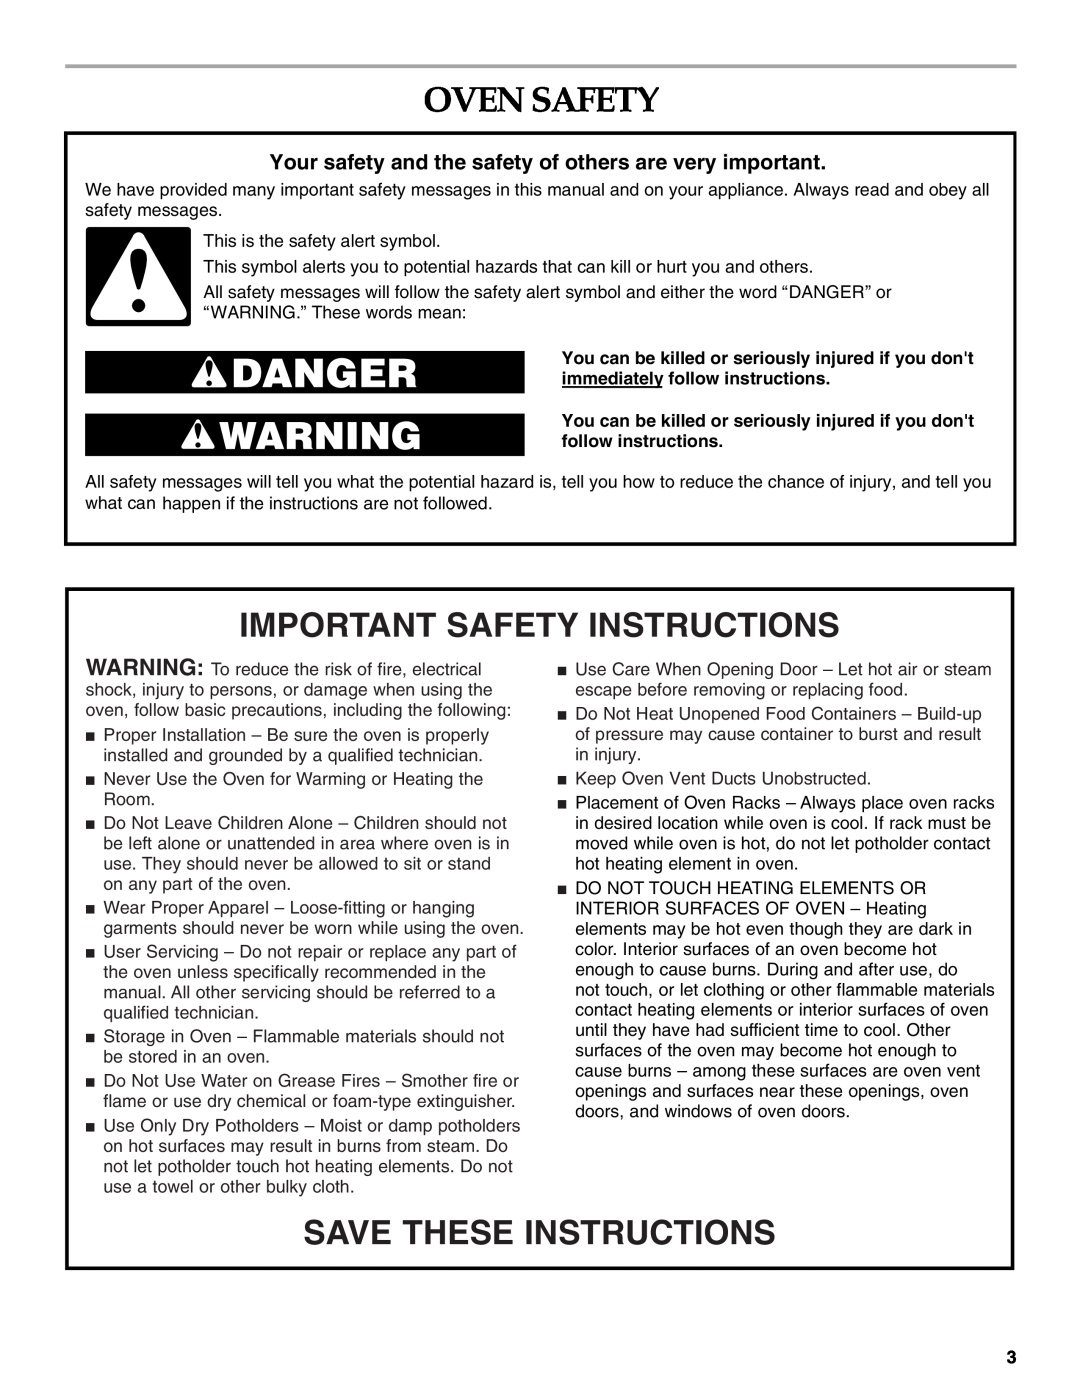 KitchenAid KEBC207, KEBV107, KEBV208 manual Oven Safety, Important Safety Instructions, Save These Instructions 